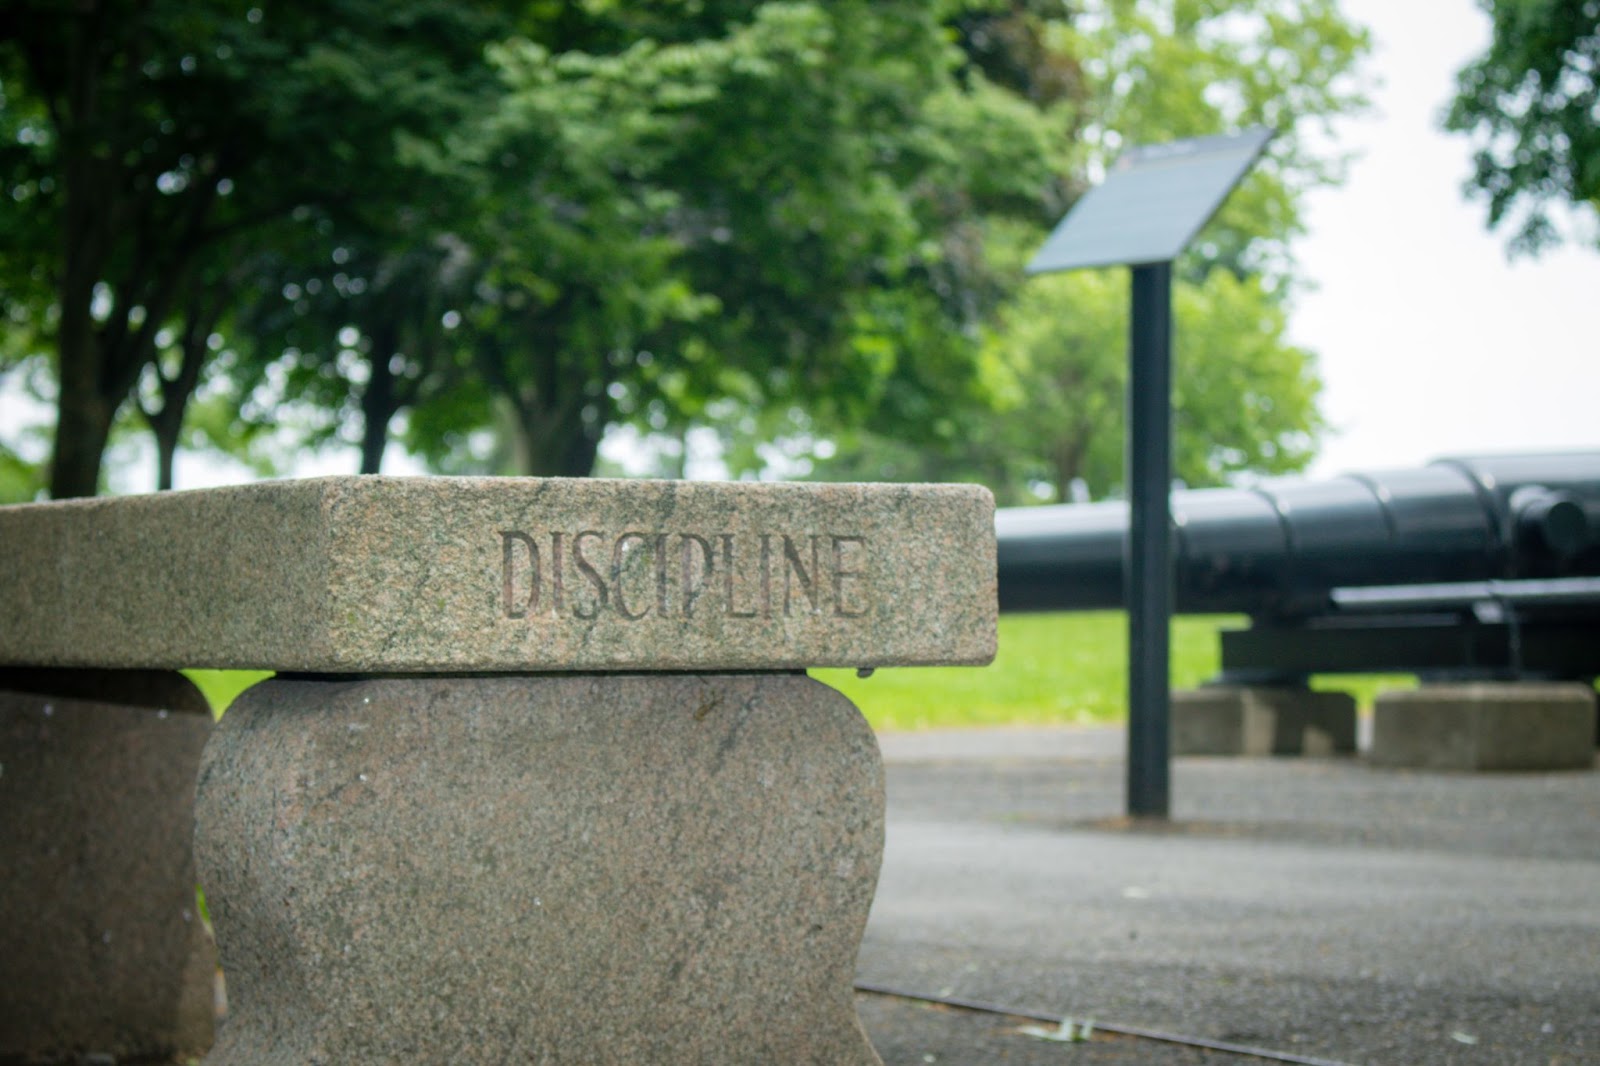 this image says discipline